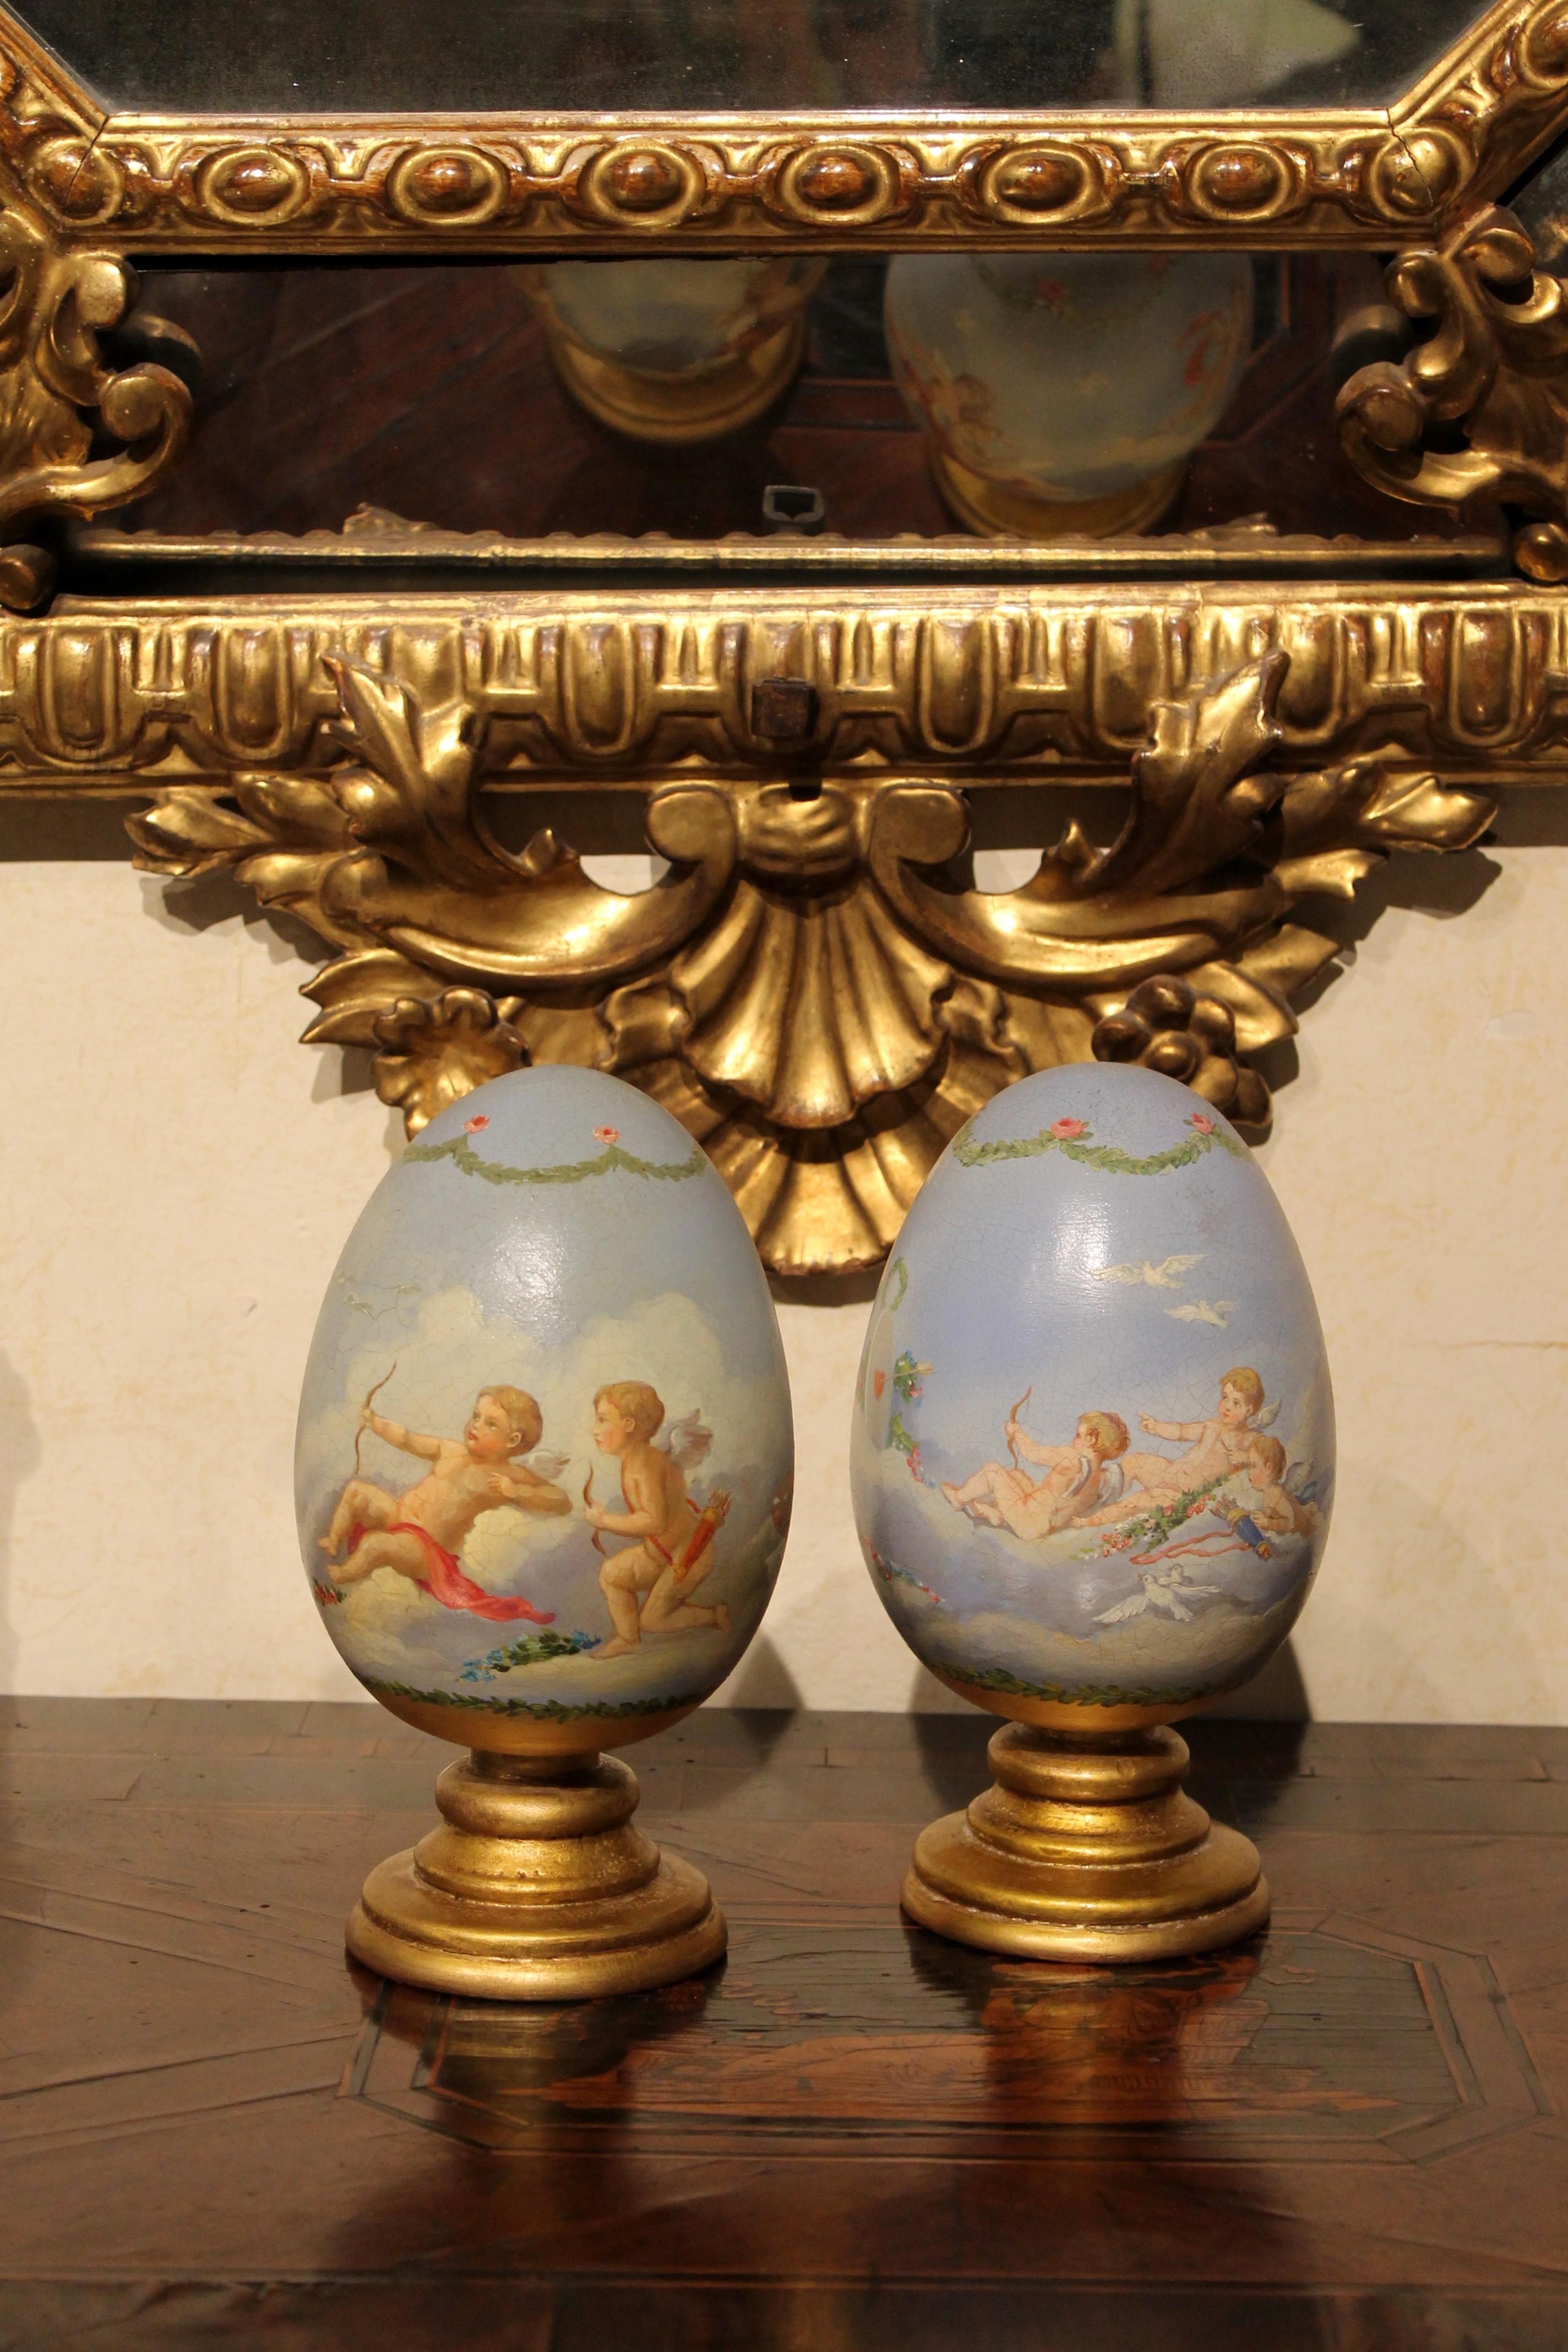 decorative egg stand